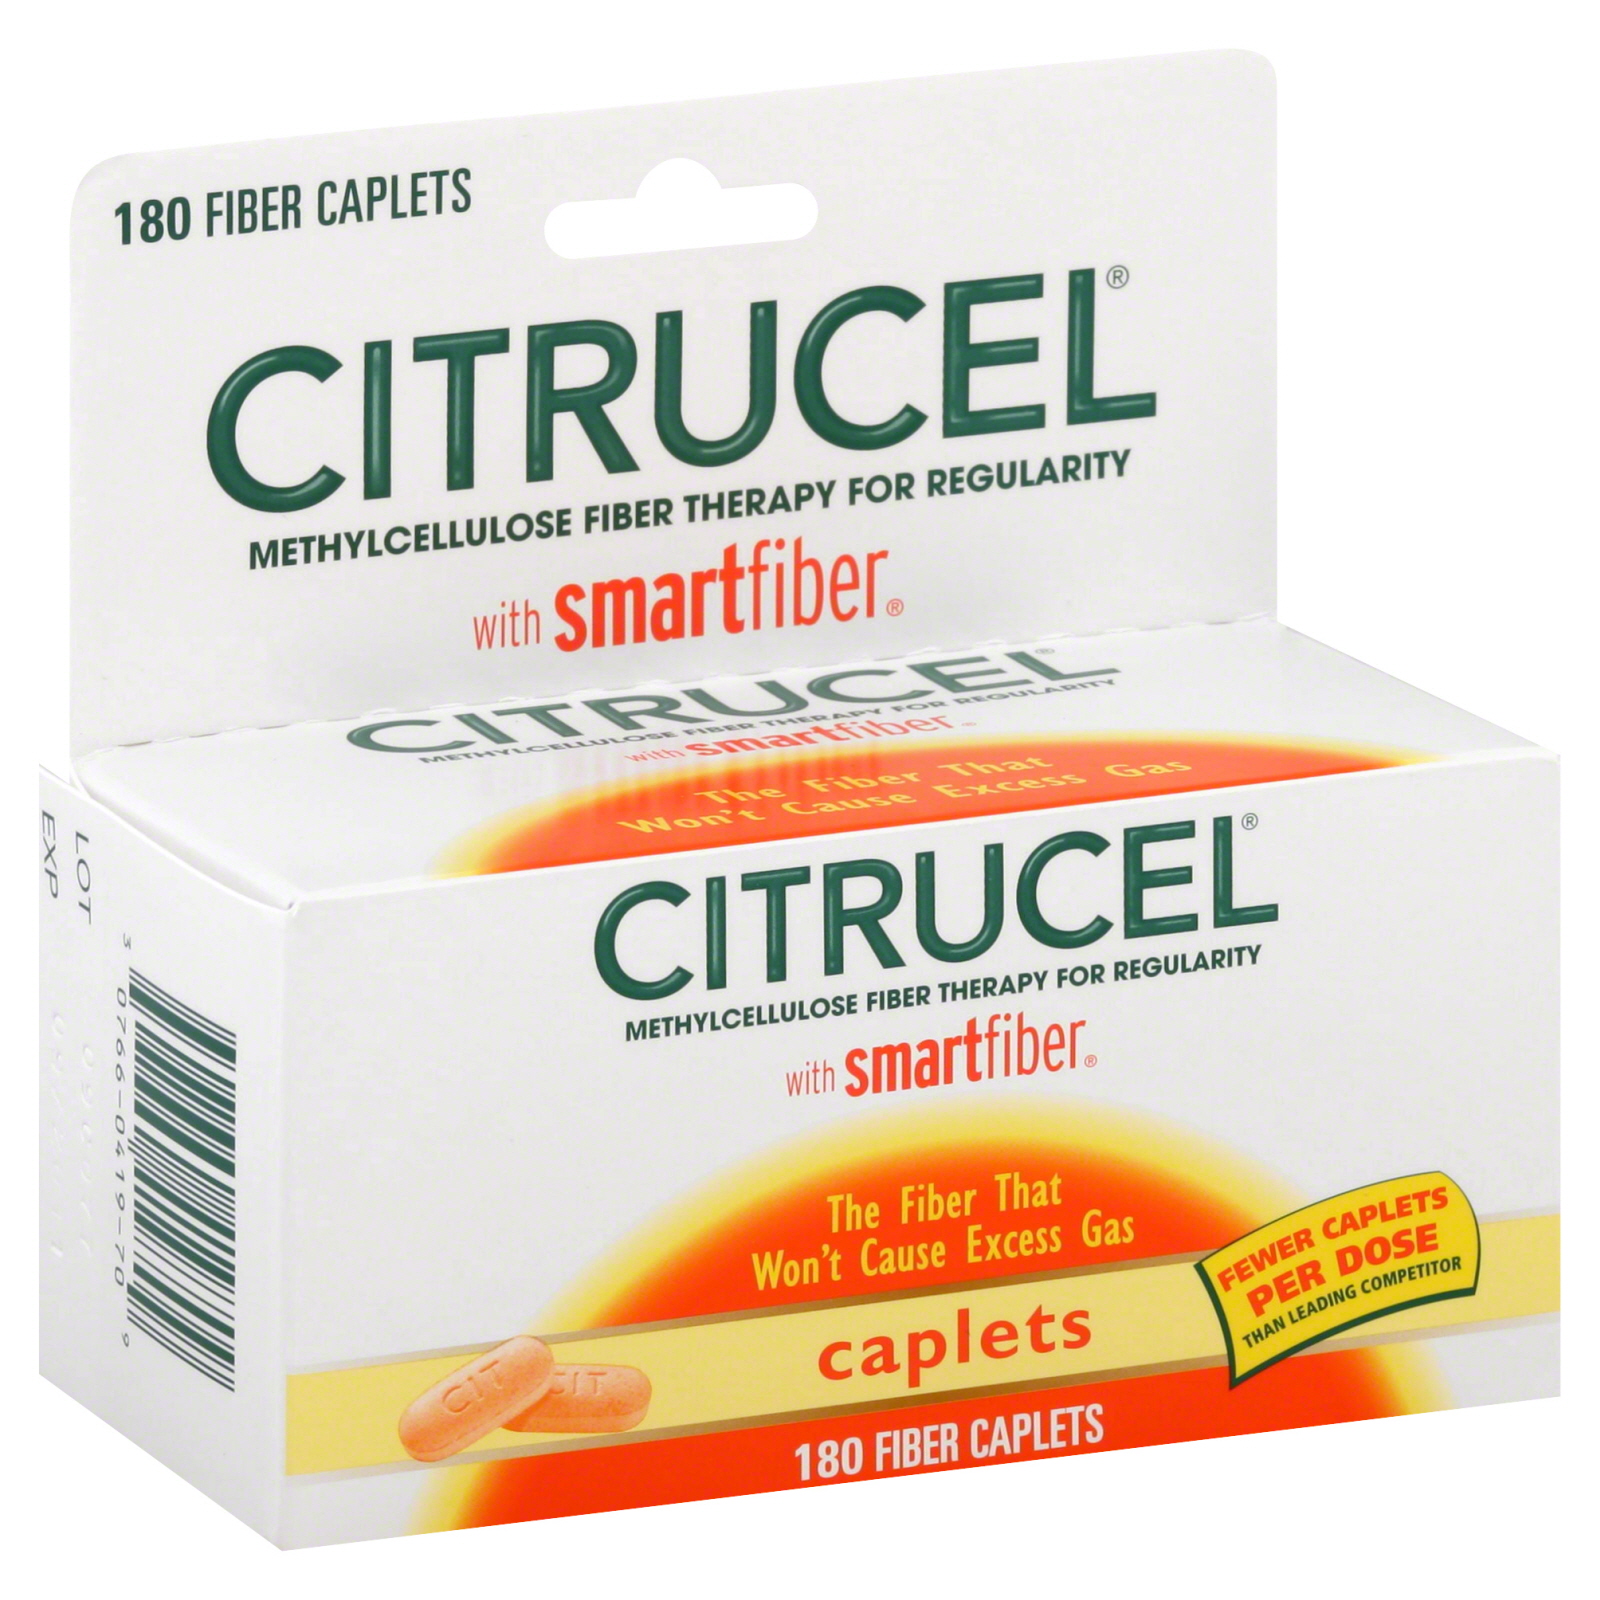 Citrucel Methylcellulose Fiber Therapy for Regularity, Fiber Caplets, 180 caplets